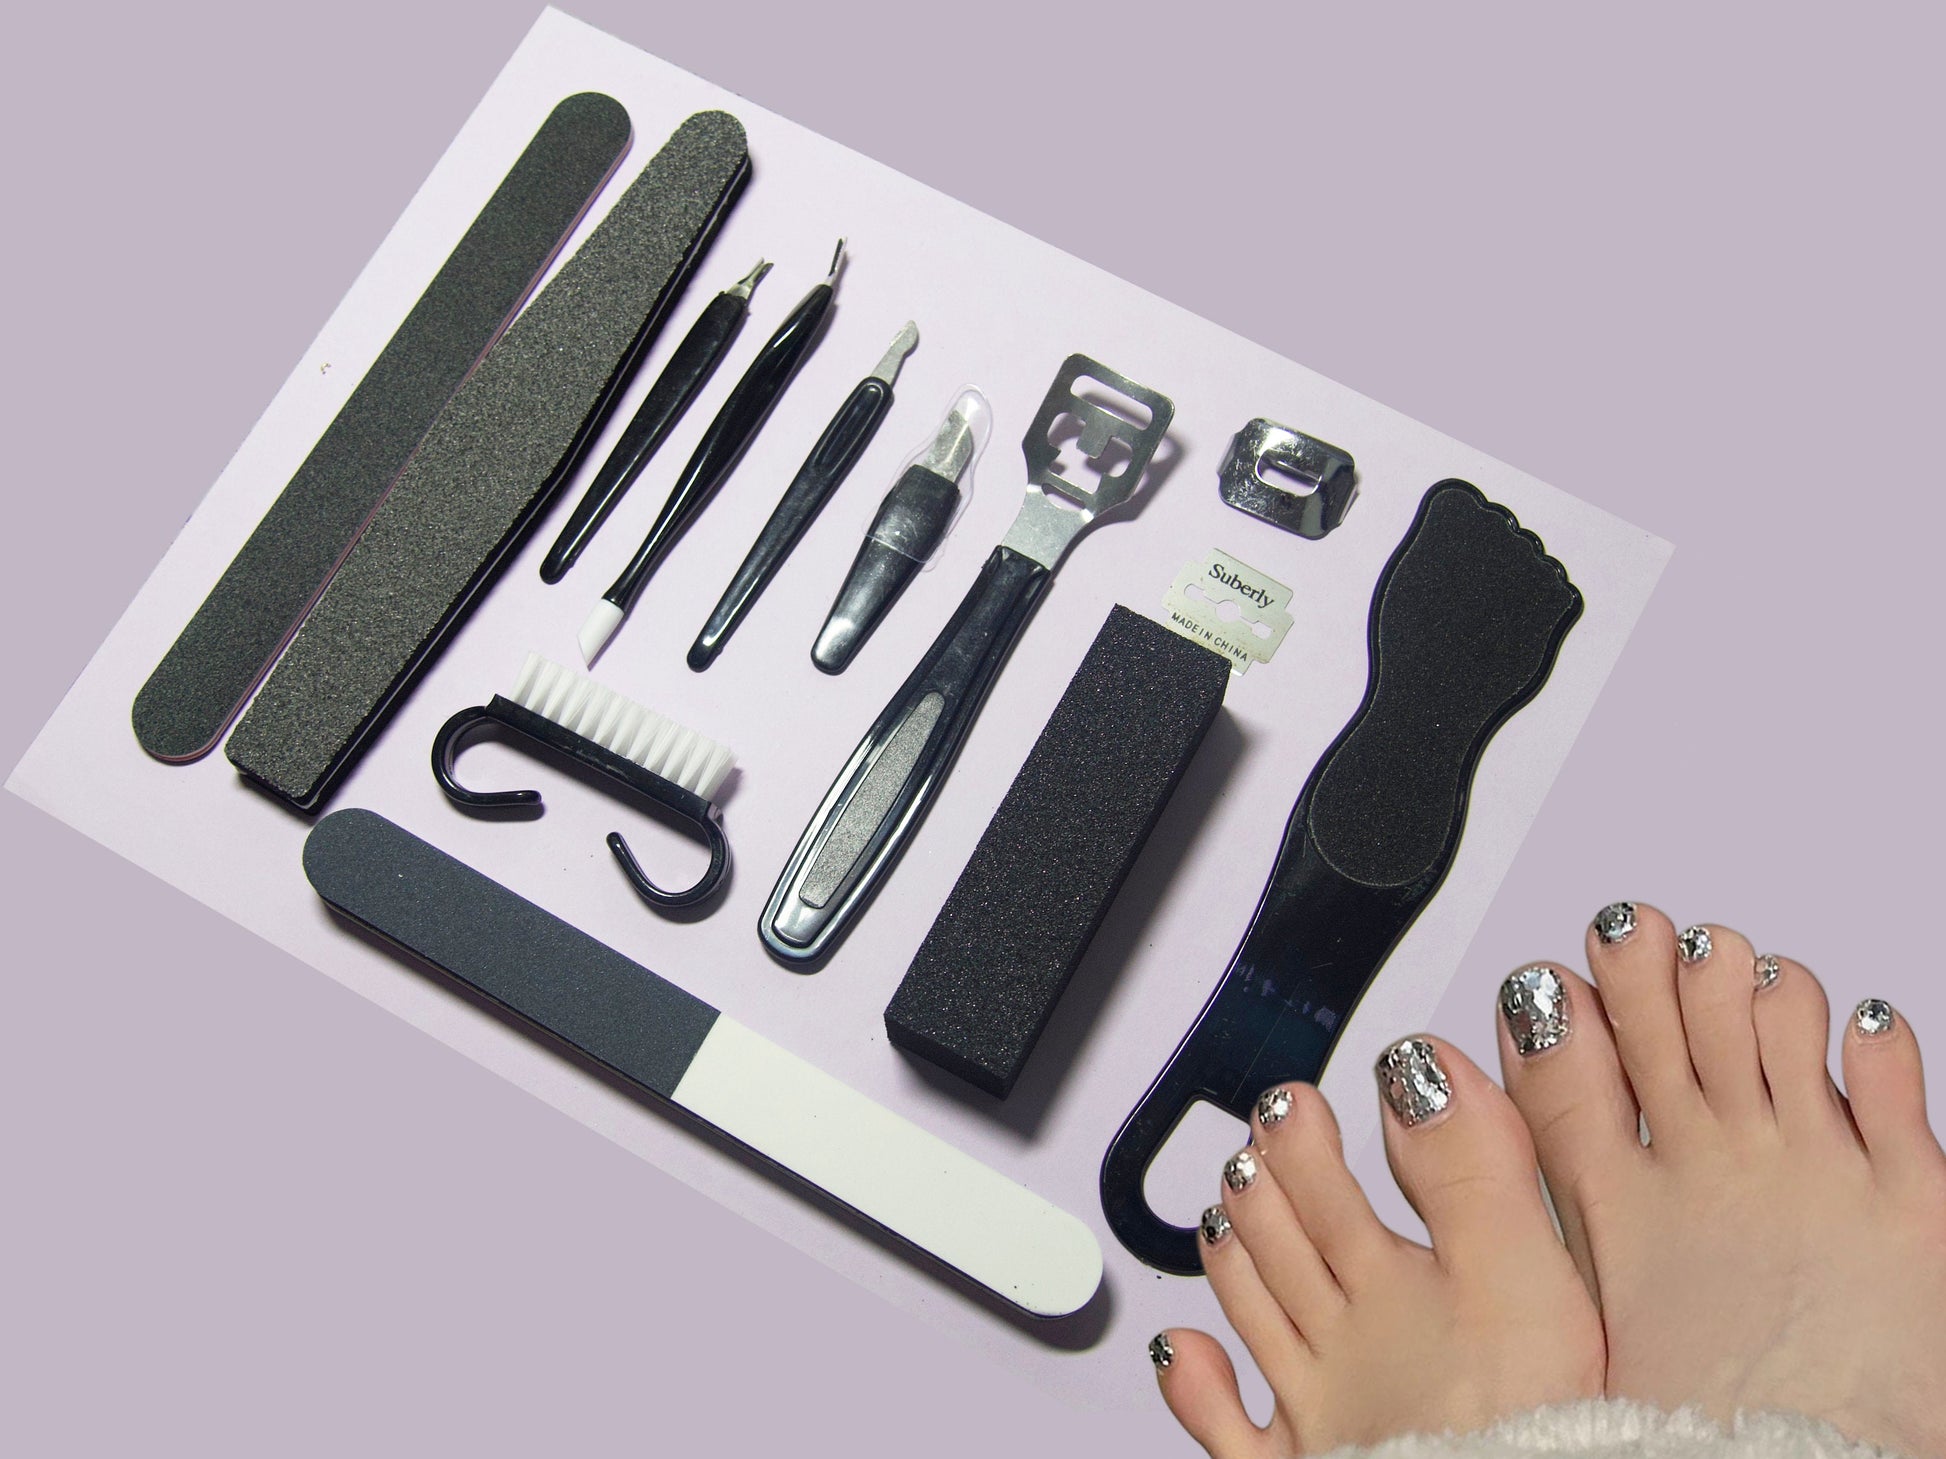 Professional Pedicure Tools Set Foot Care Kit Dead Skin Remover Pedicure Kit